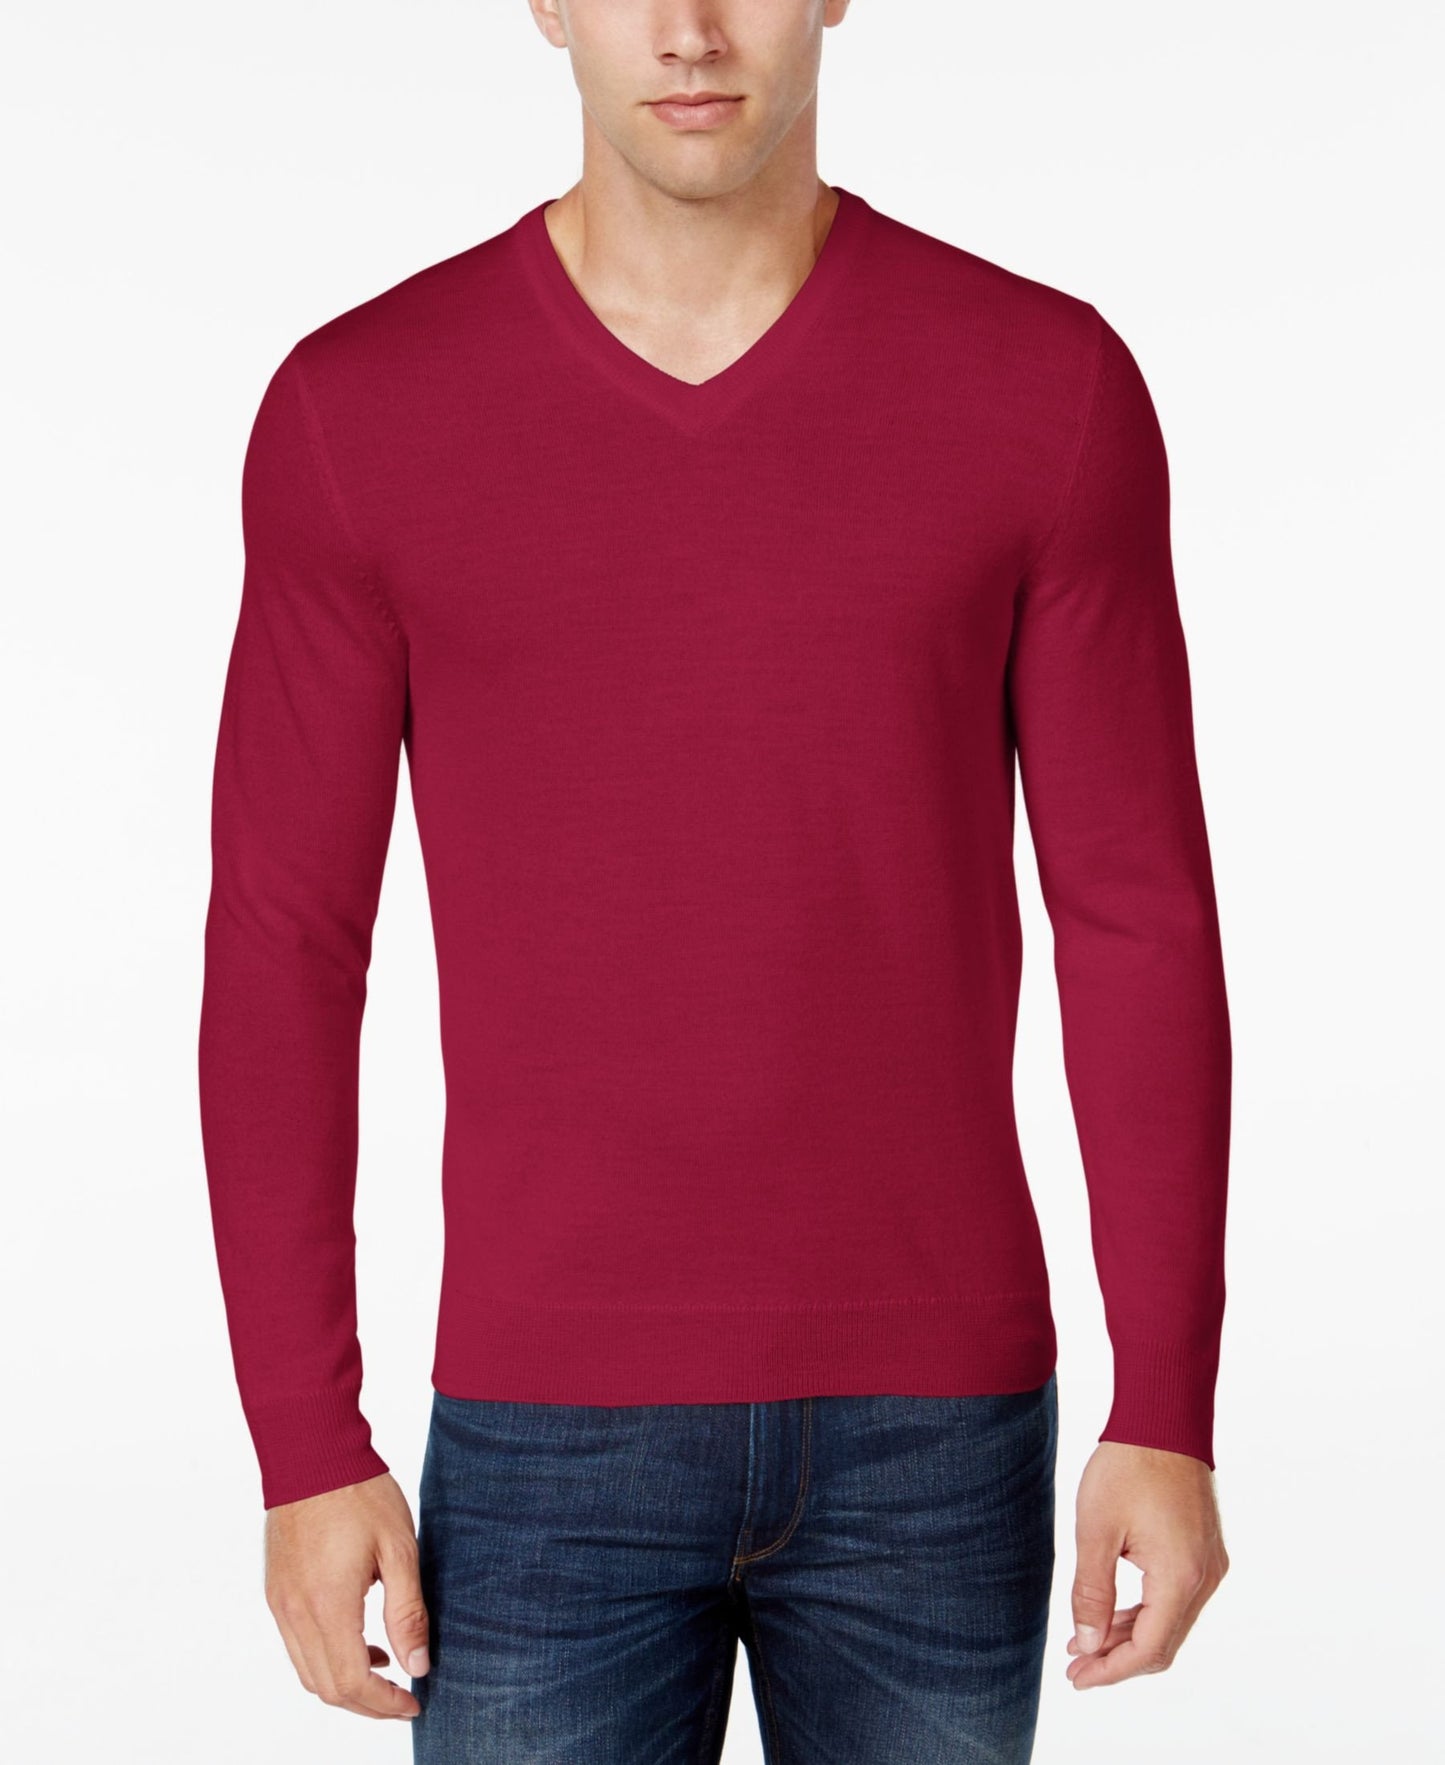 Club Room Merino Blend Pullover Sweater Cherry XLarge